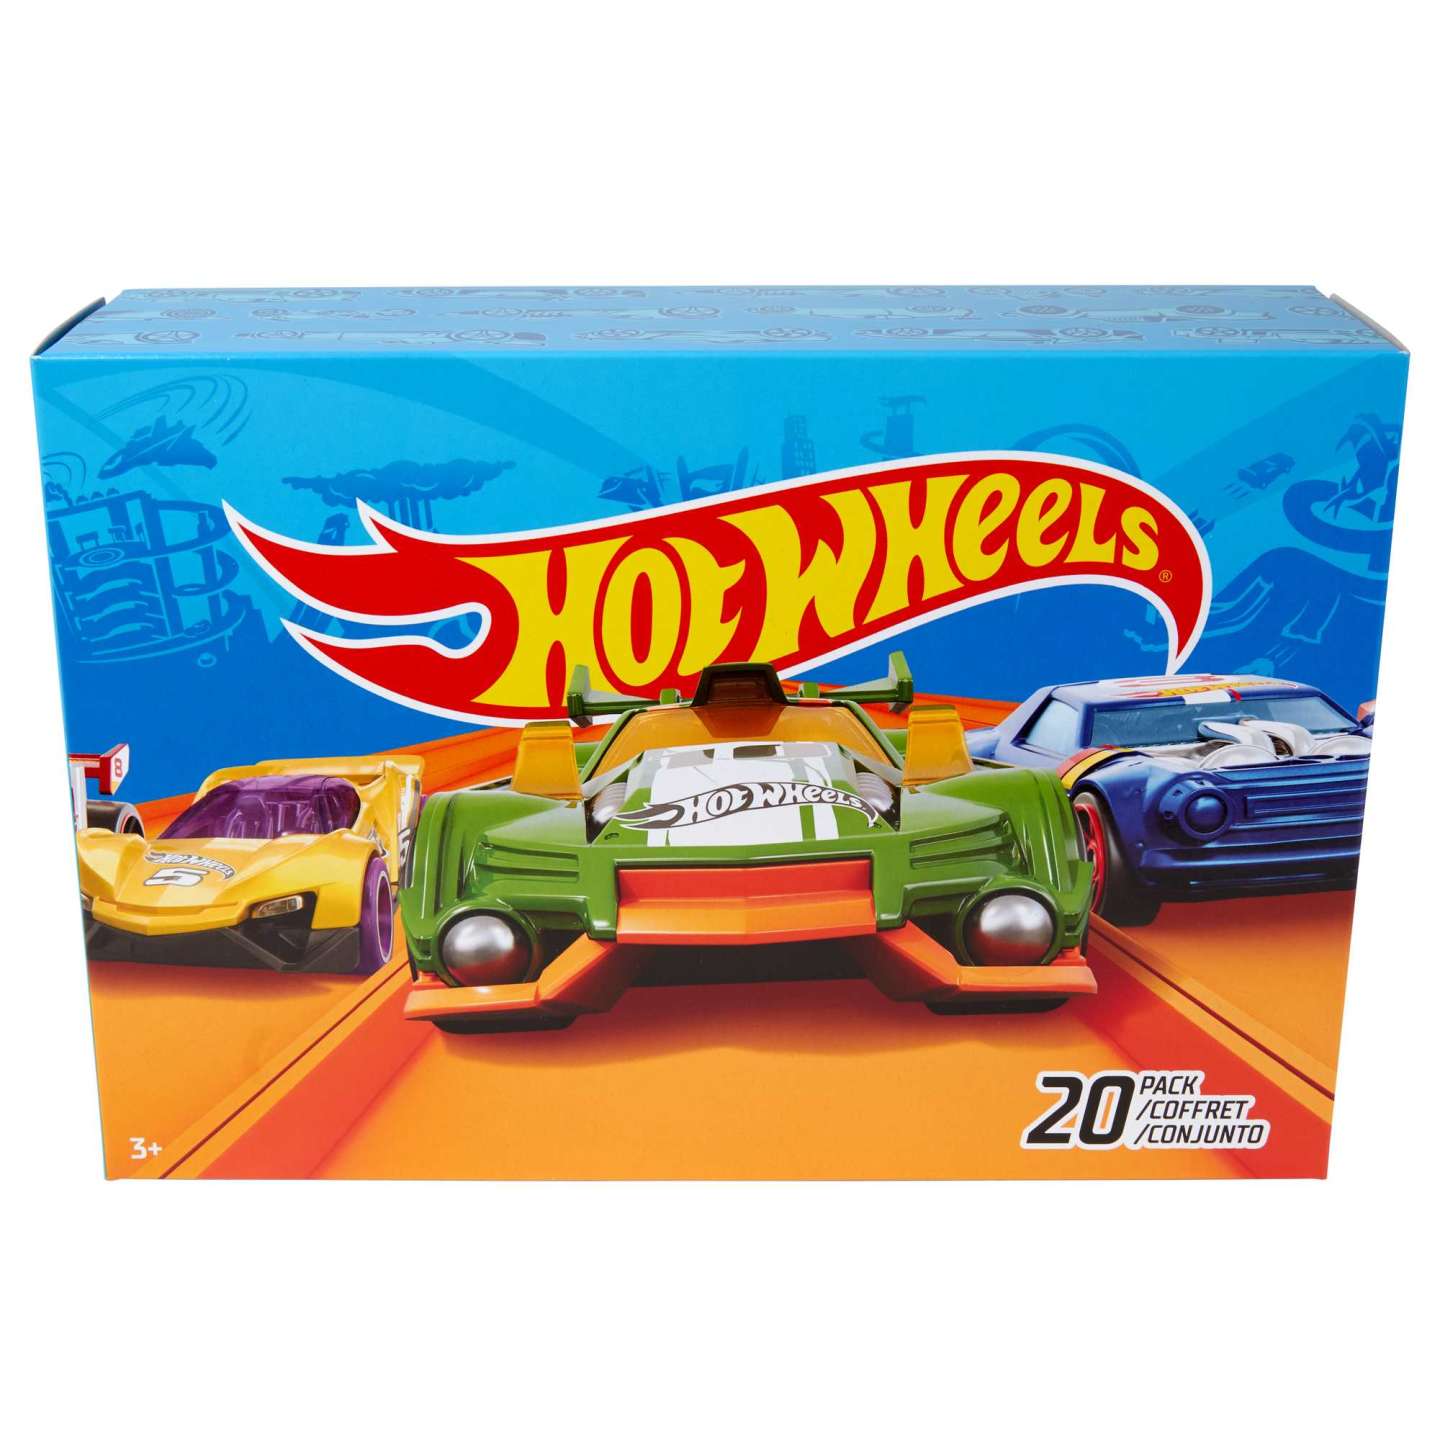 Mattel DXY59 - HotWheels - Geschenkset, Die-Cast-Fahrzeuge, 1:64, 20er Pack